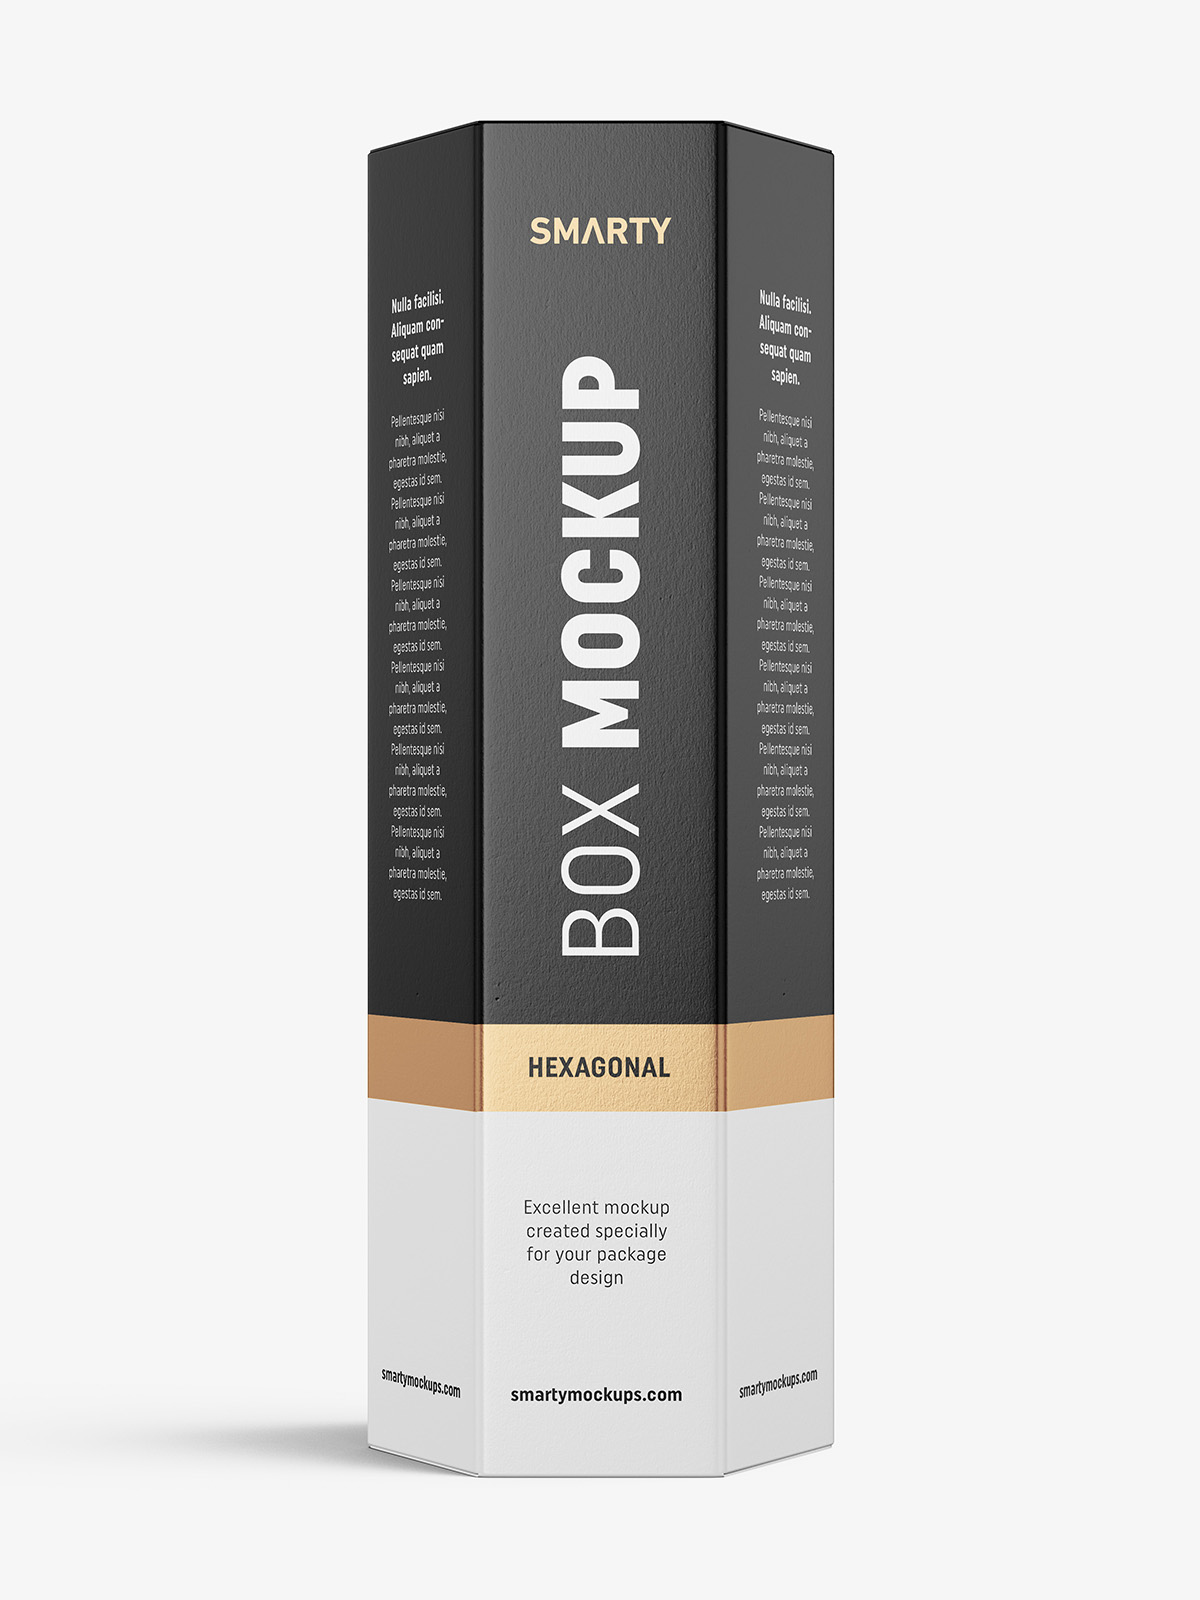 Download Hexagonal Box Mockup White Metallic Kraft Smarty Mockups